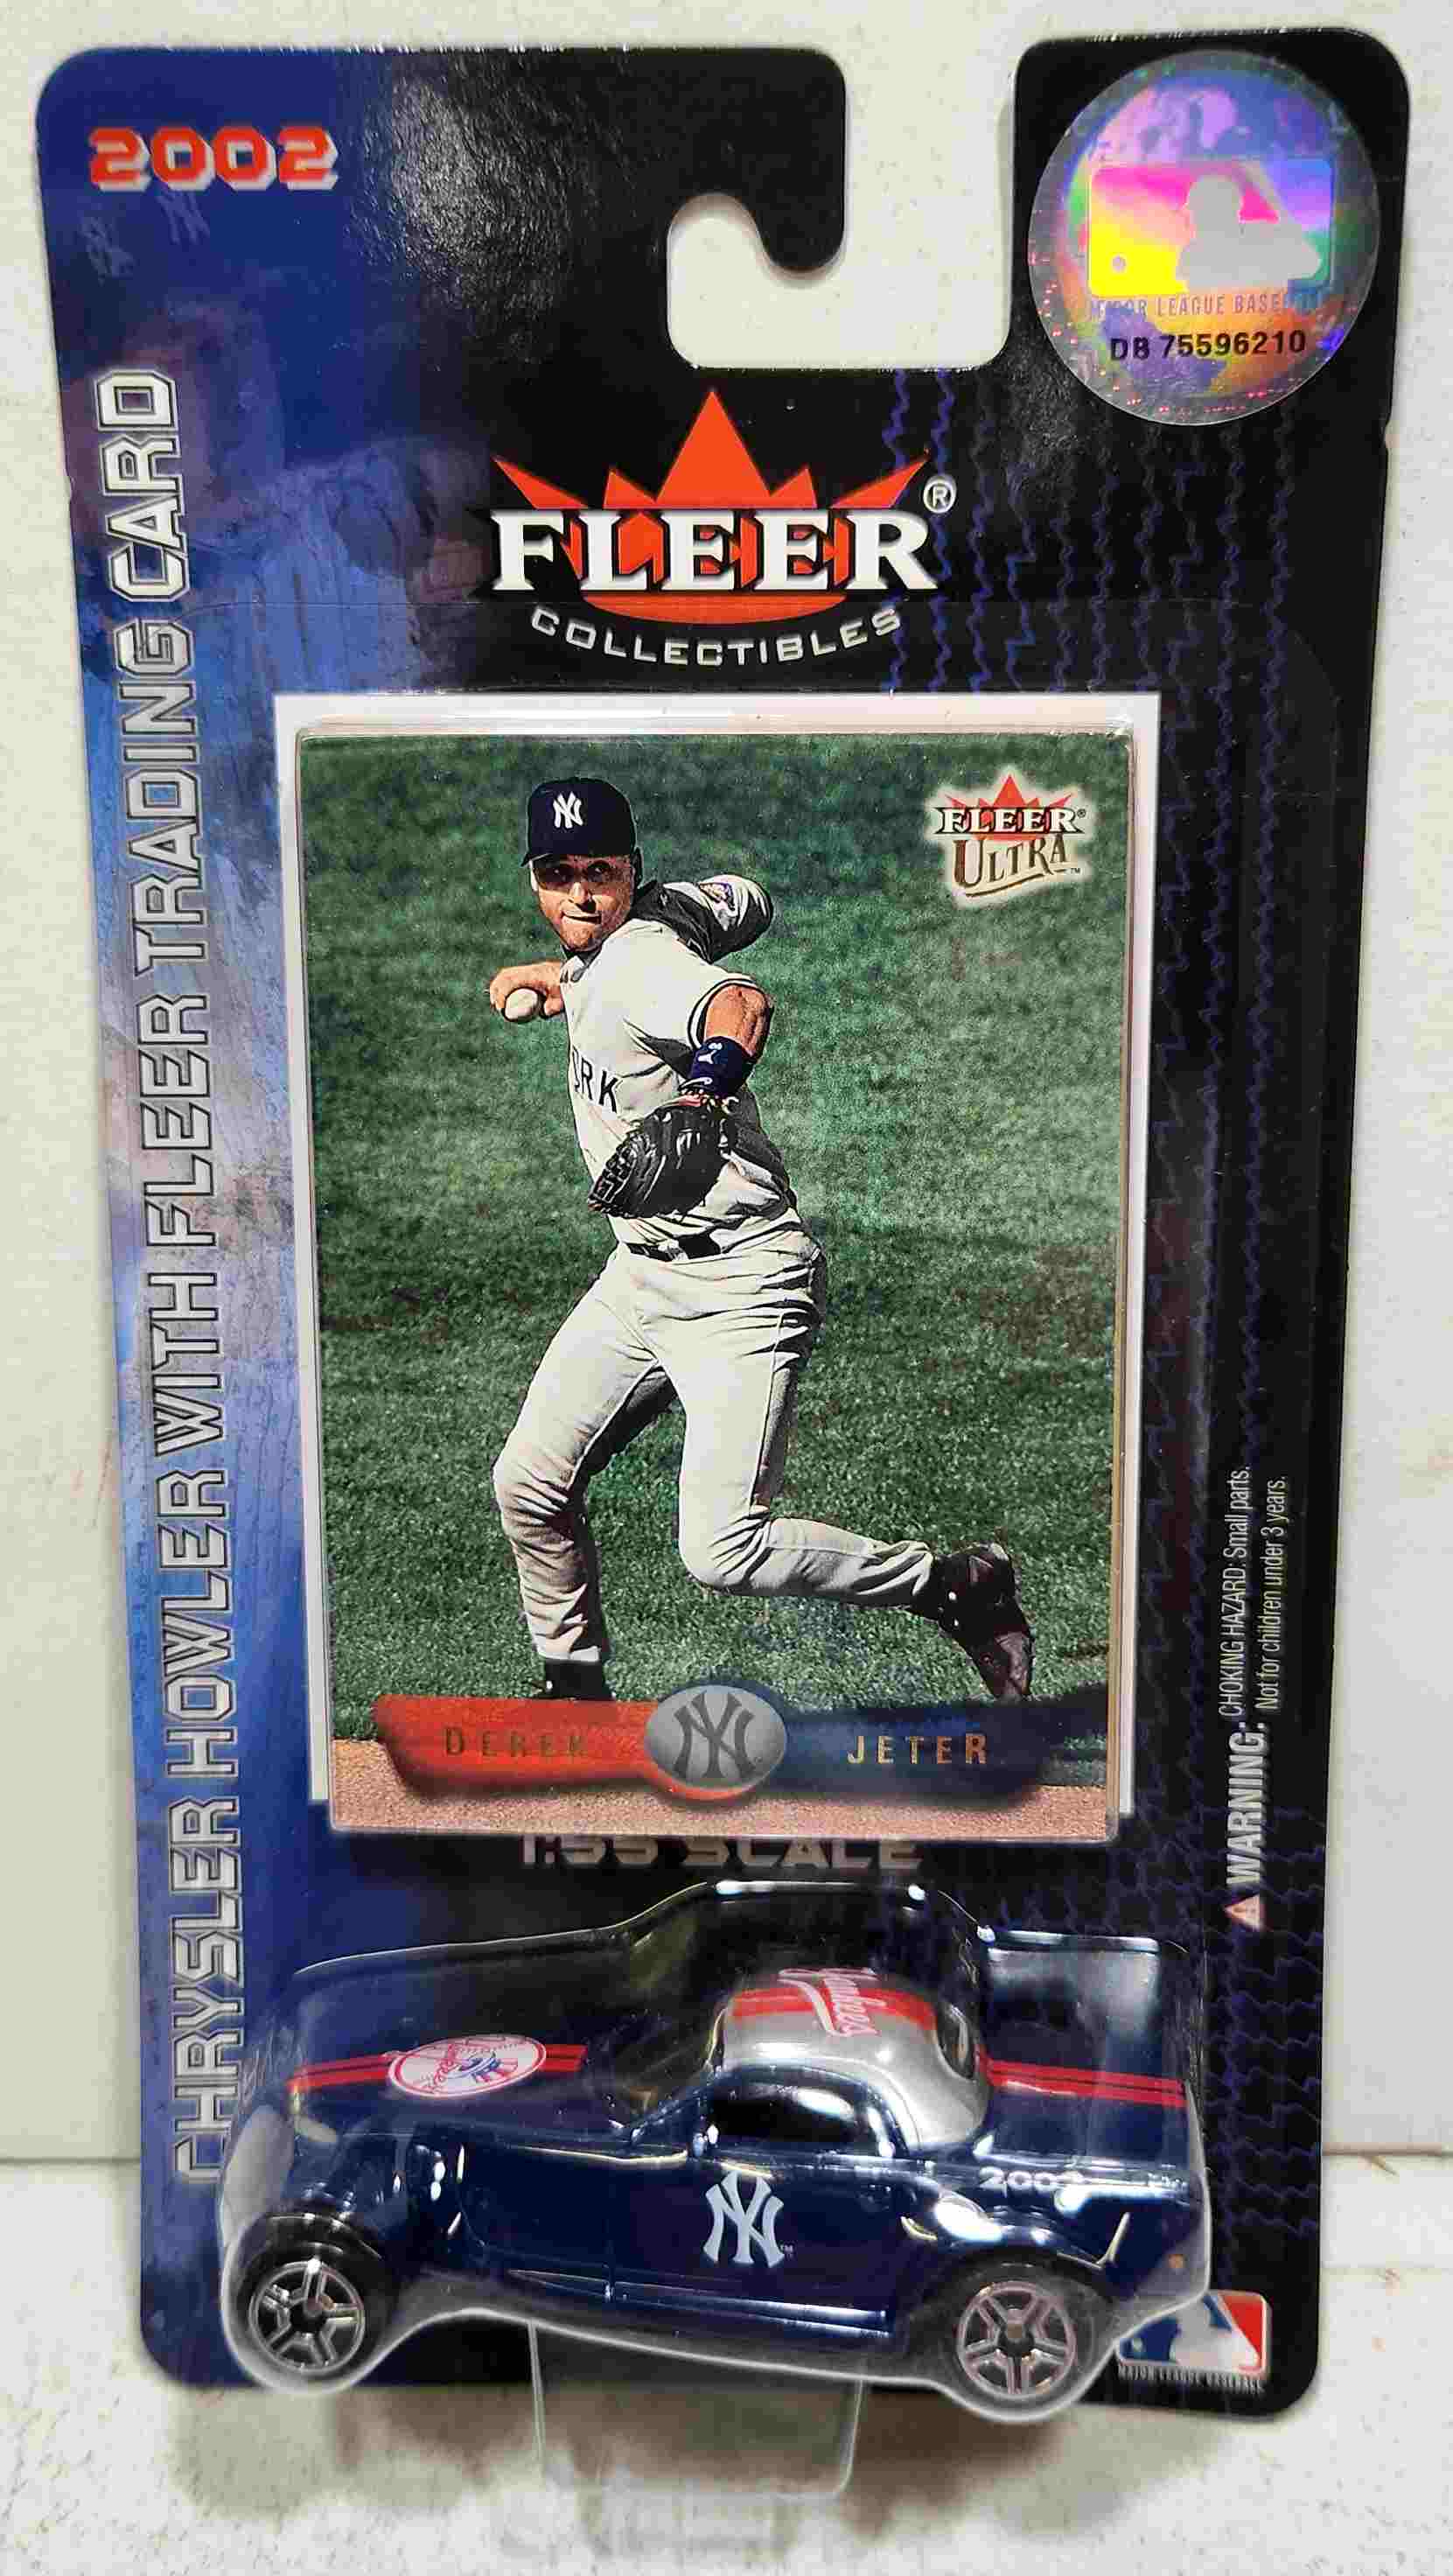 2002 NY Yankees 1/64th Chrysler Howler with Derek Jeter trading card